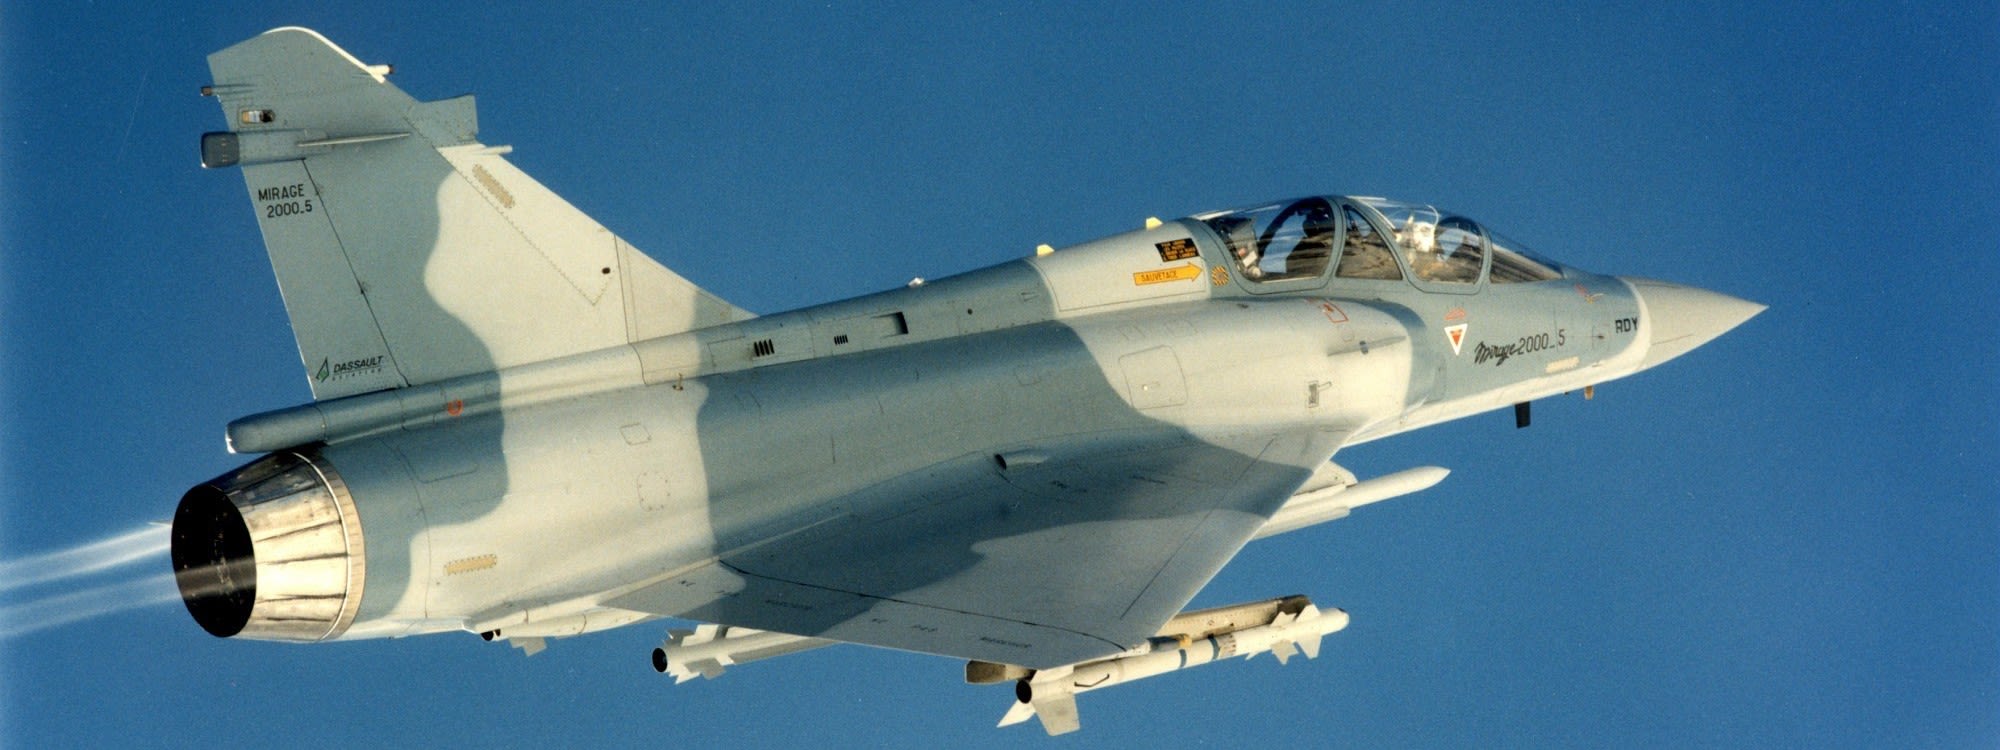 Mirage 2000-5 flying